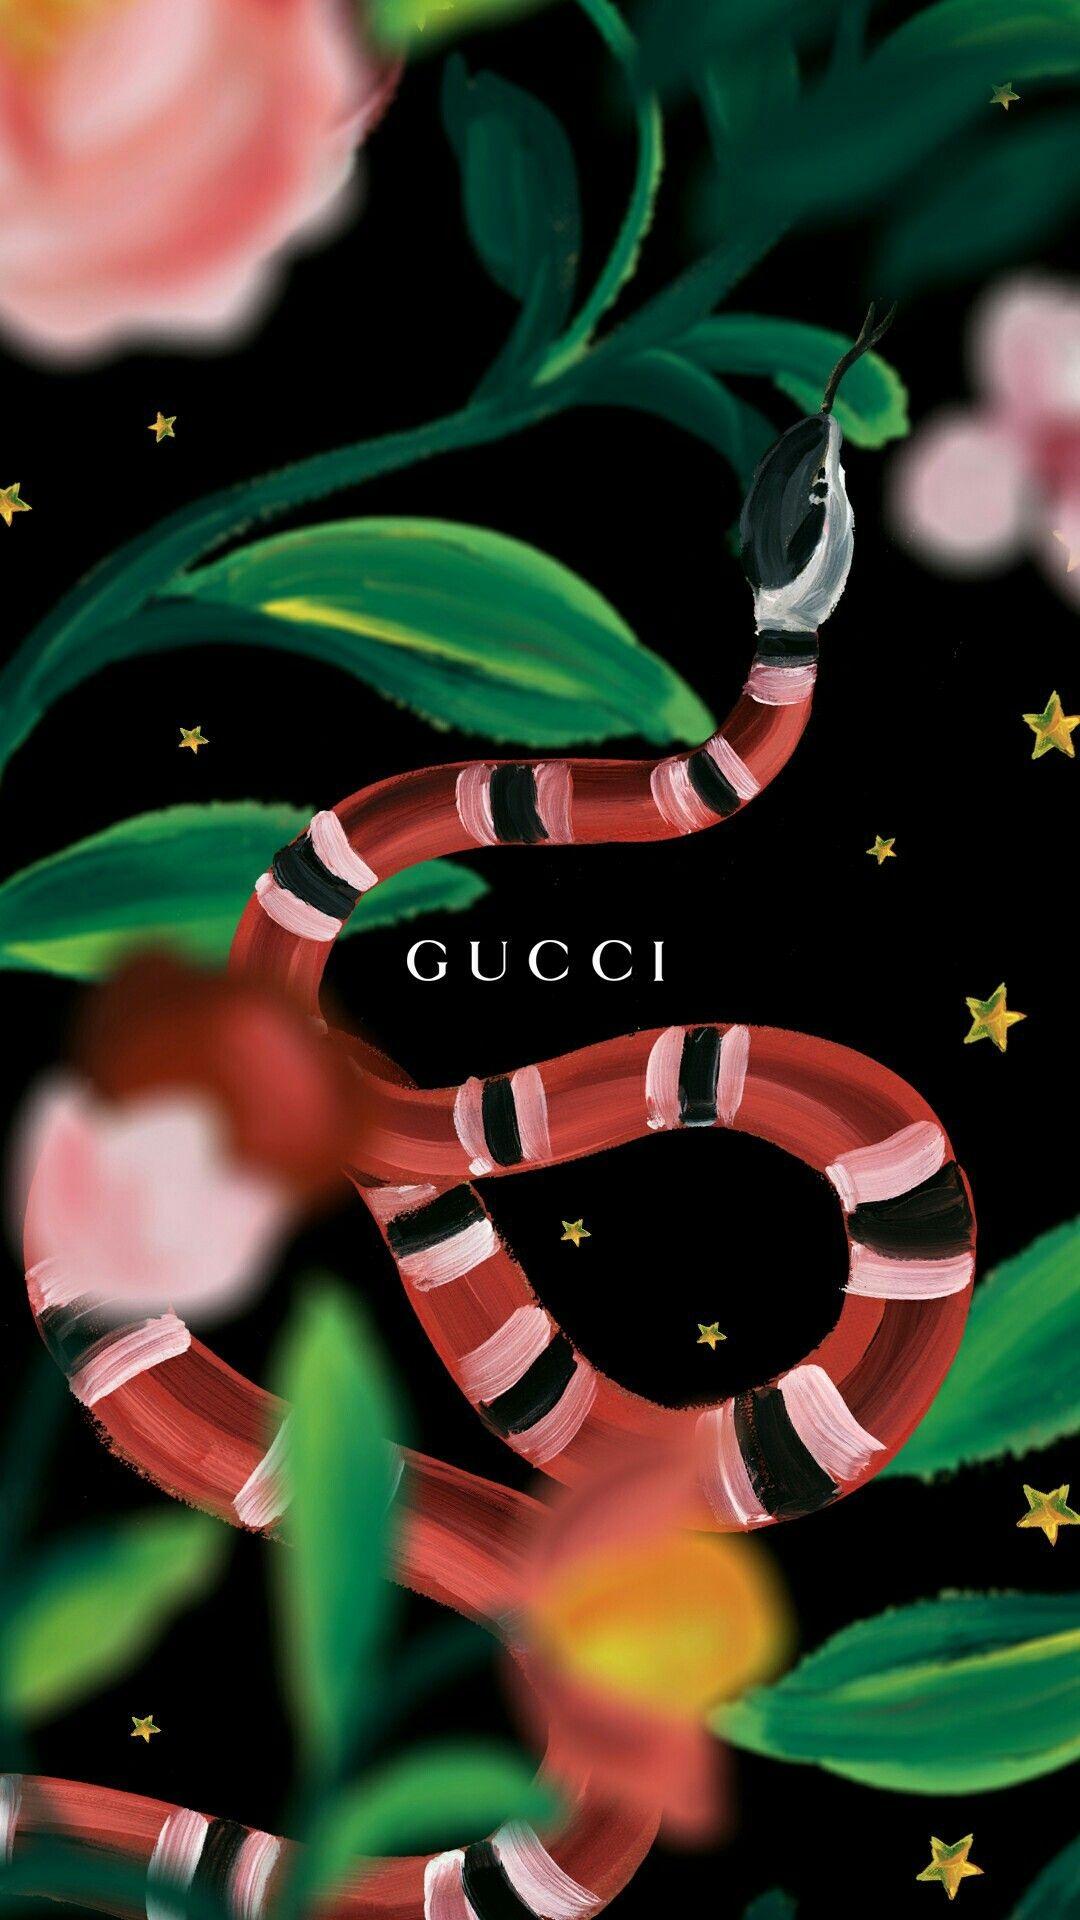 Supreme Cool Gucci Wallpaper  Sfondi per iphone, Sfondi iphone